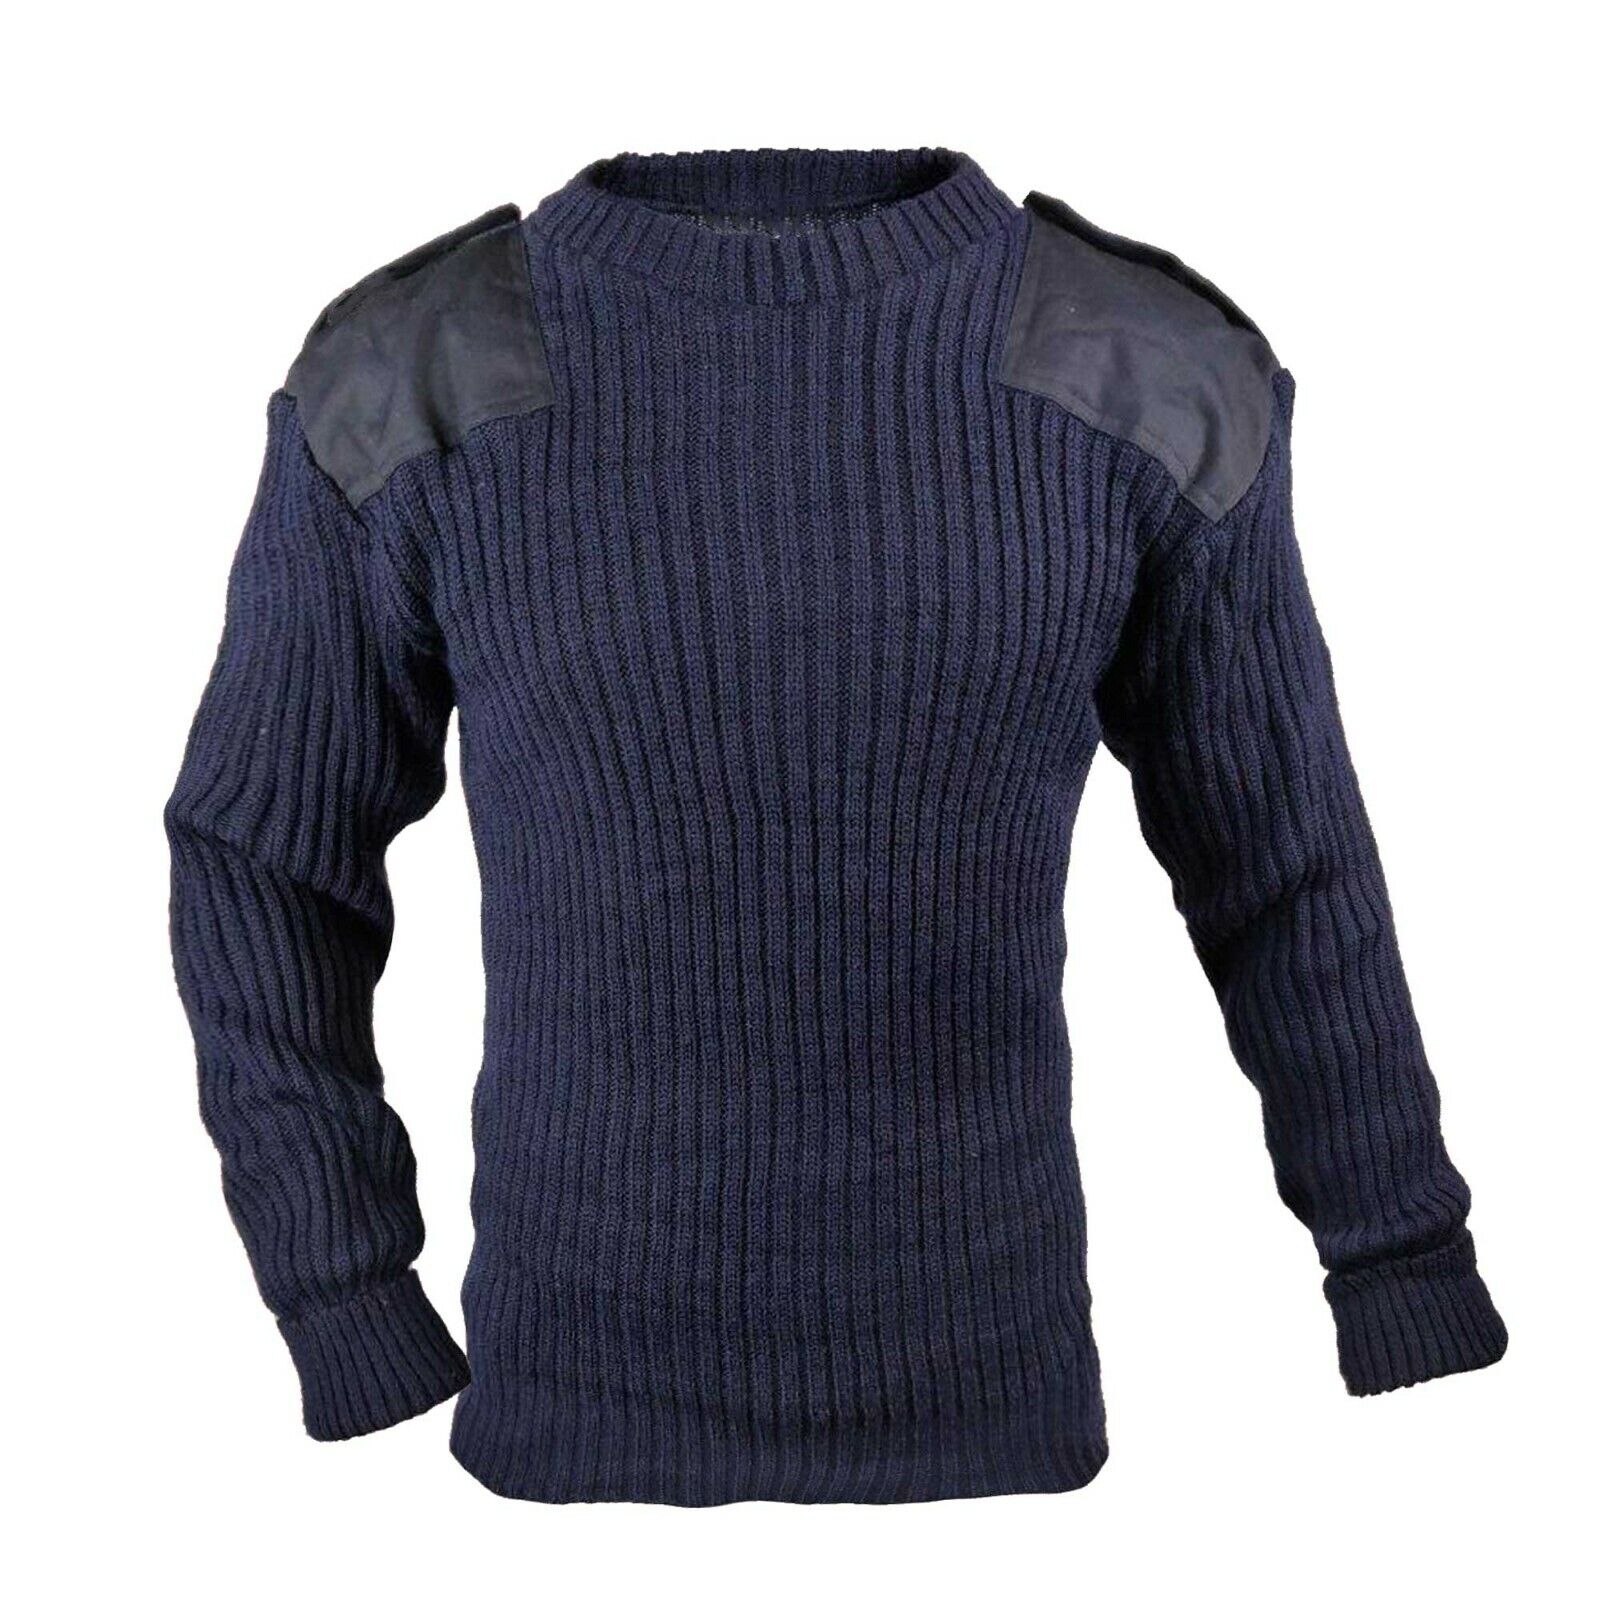 Genuine British Army Jumper Combat Pullover Wool Olive Navy RAF Cadet Sweater